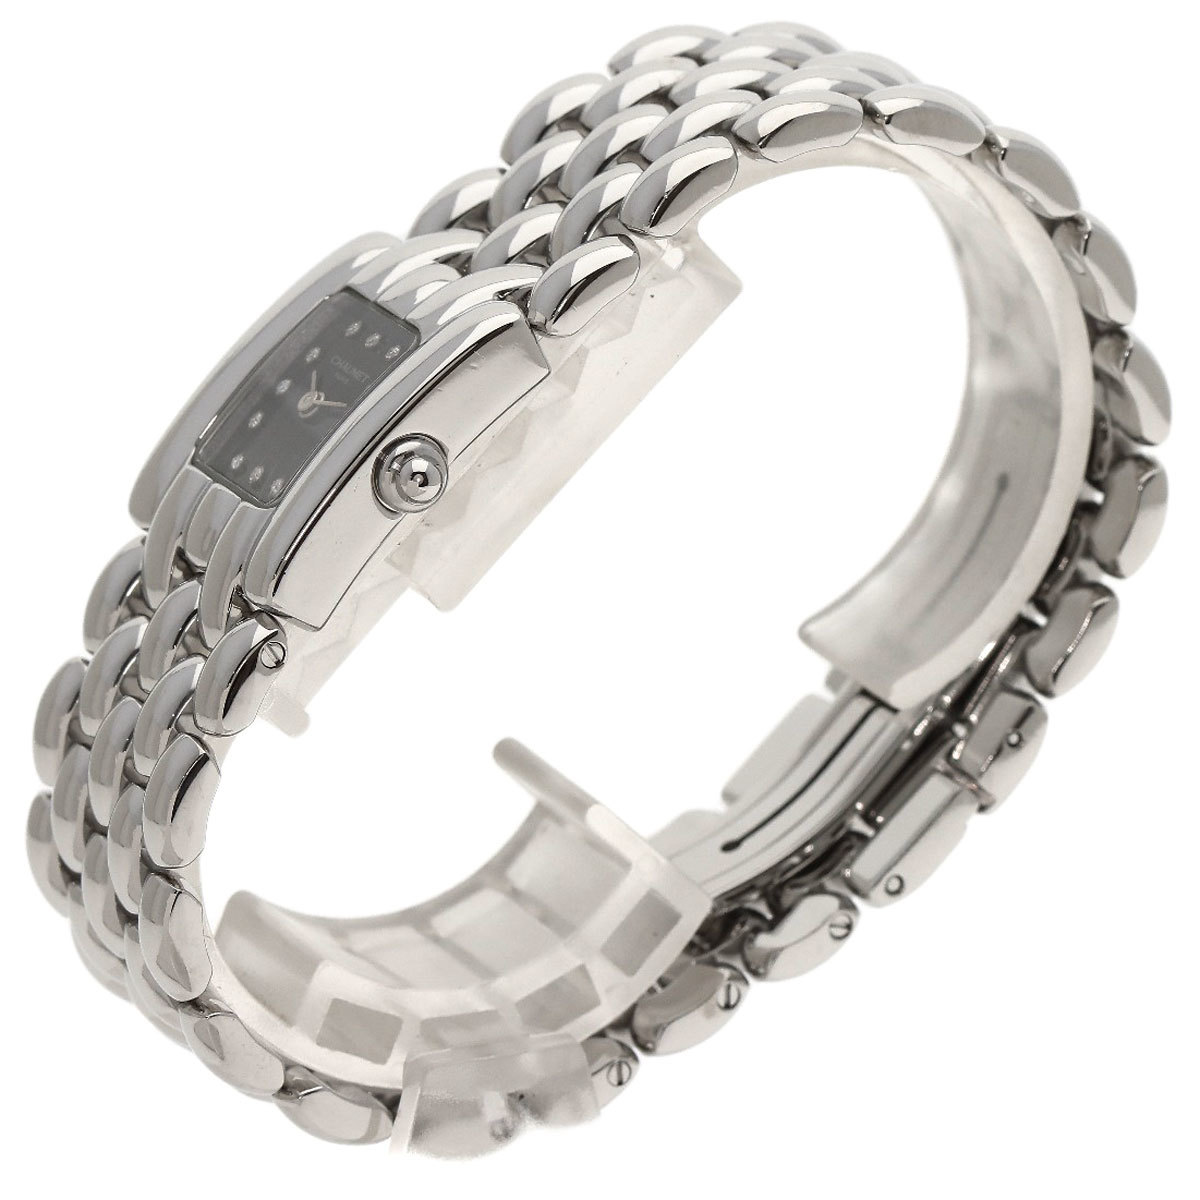 Chaumet Chaumet Kei sis12P diamond wristwatch stainless steel SS lady's used 